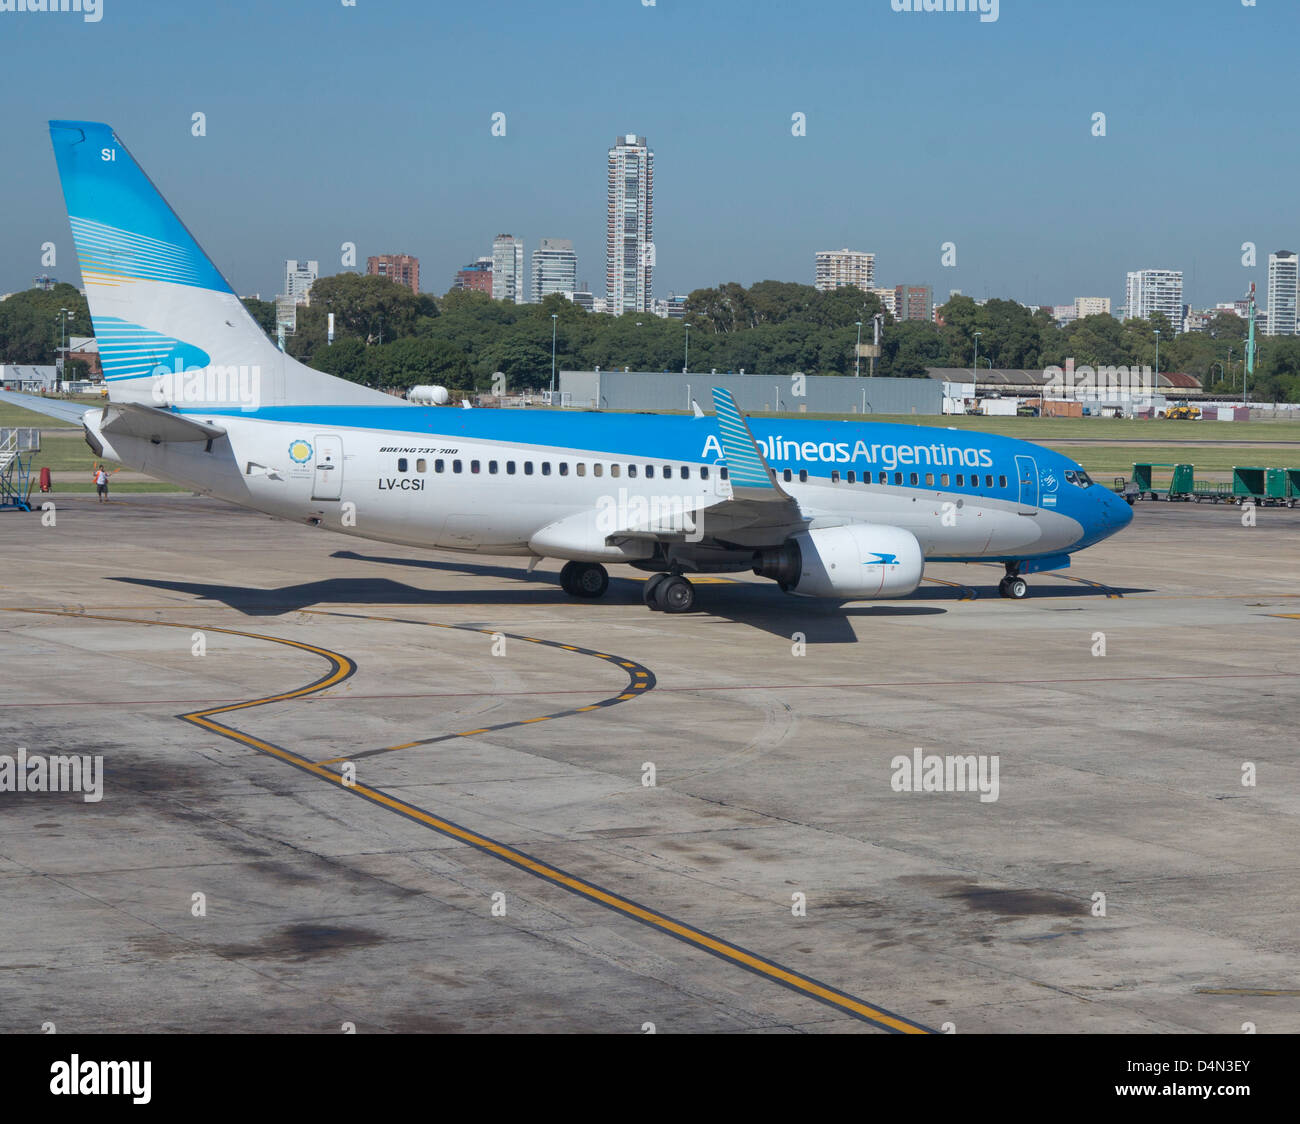 Aerolineas Argentinas airline plane at Aeroparque airport, Buenos Aires, Argentina Stock Photo